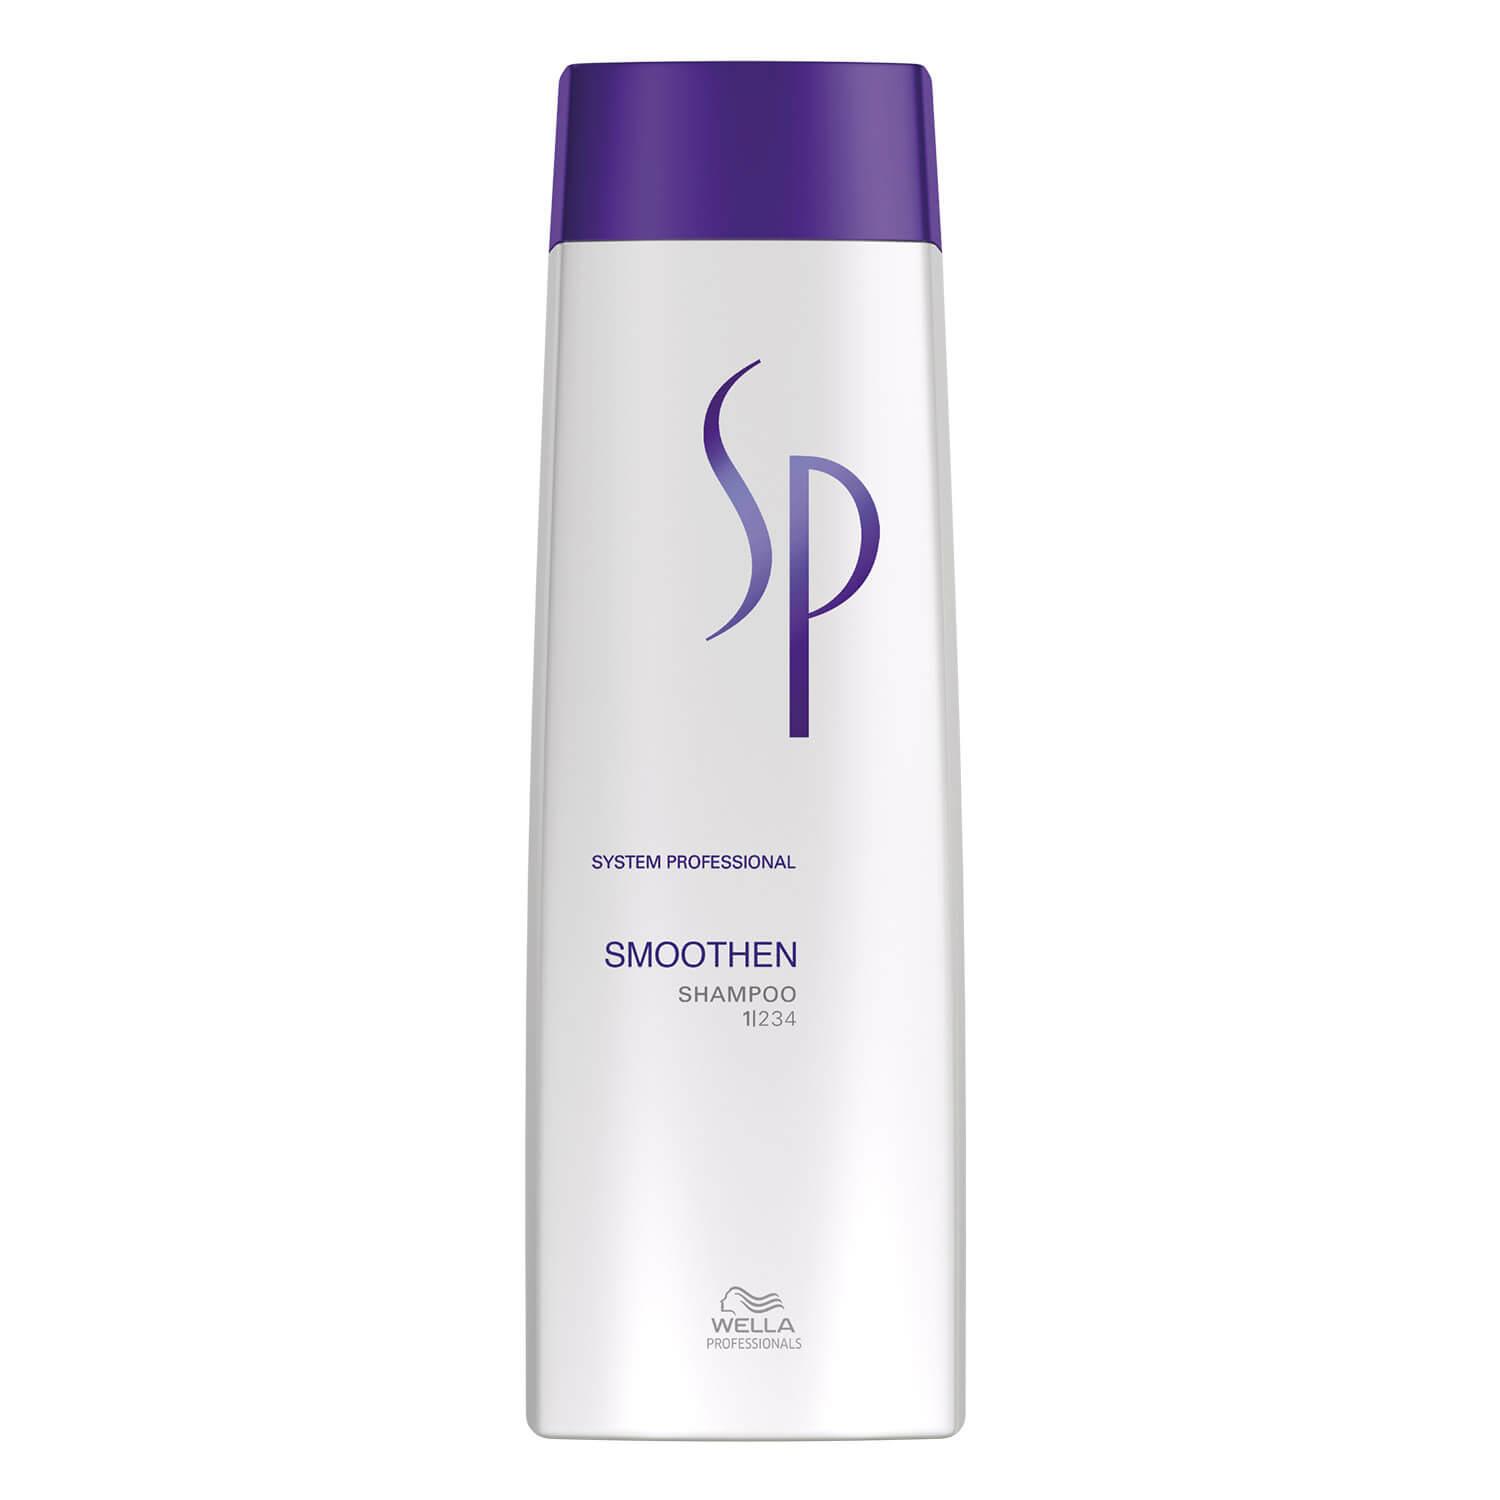 SP Smoothen - Shampoo